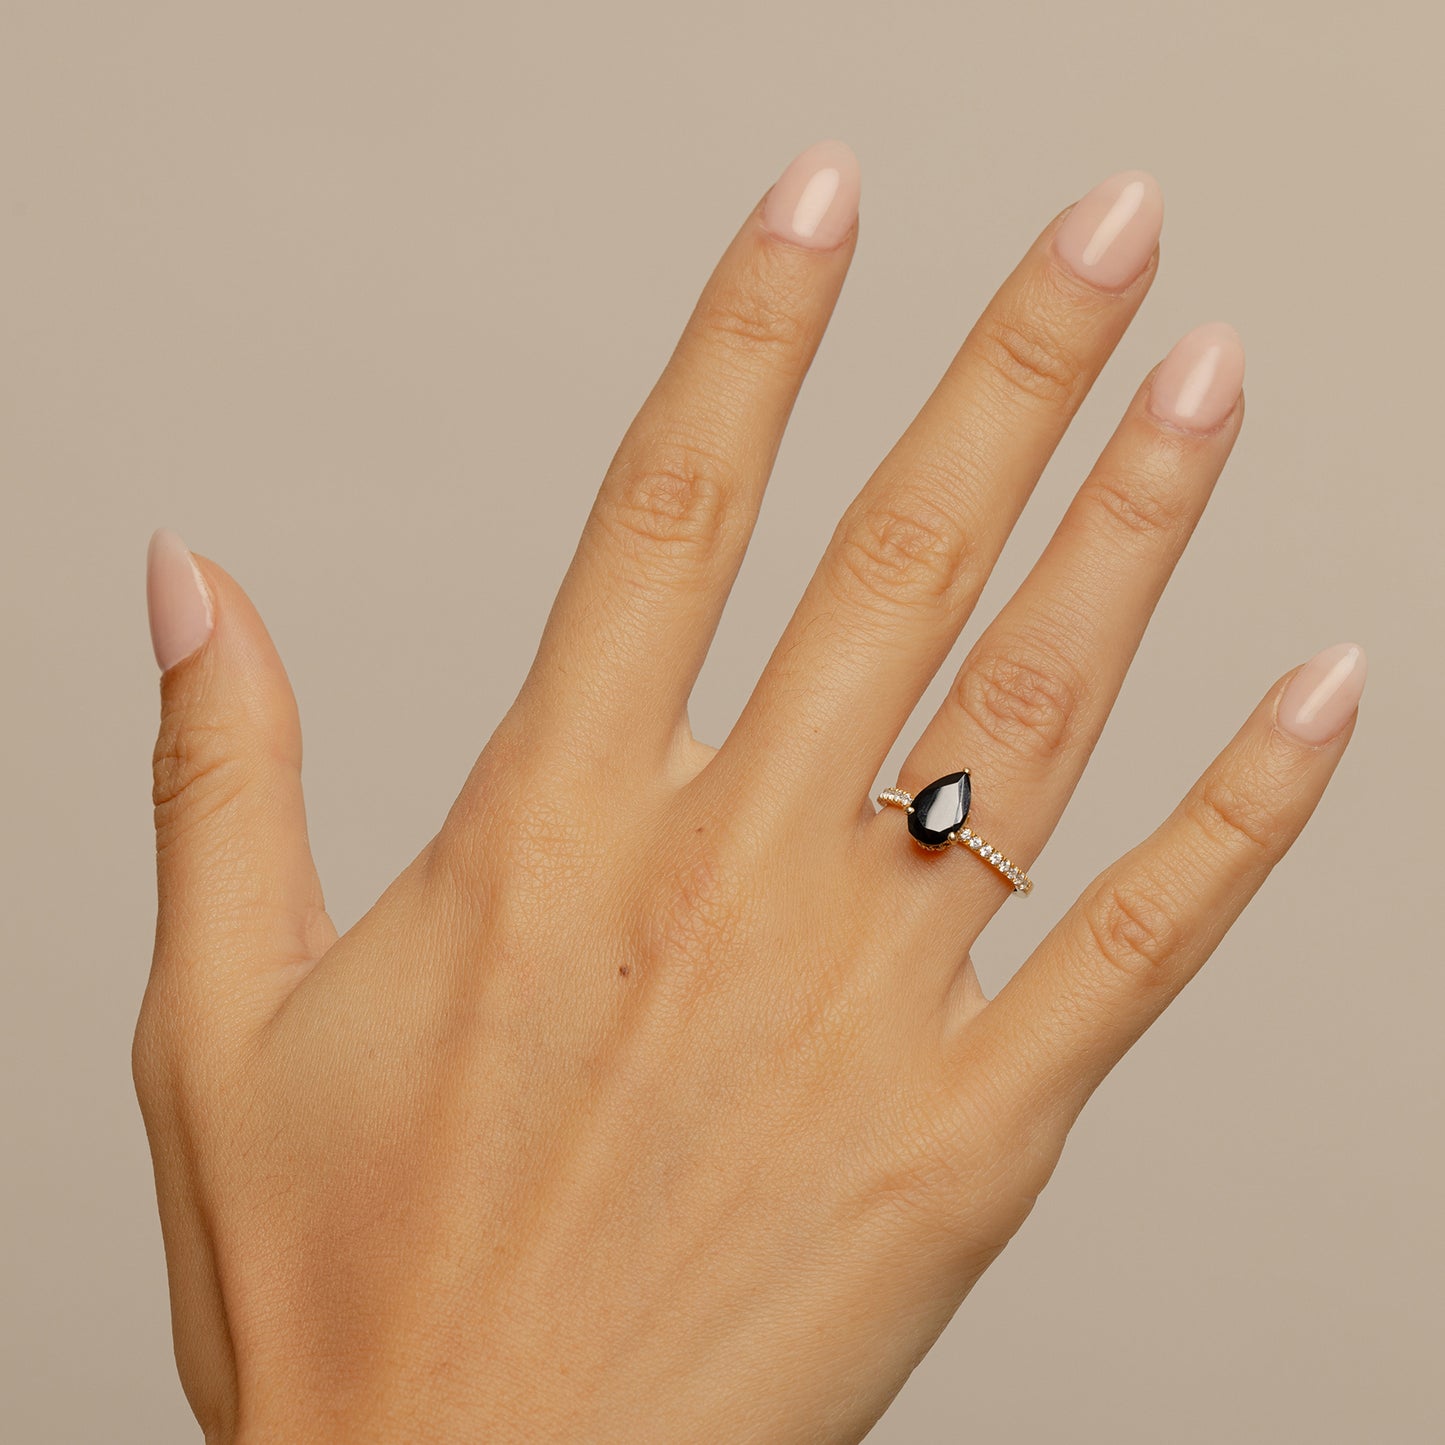 Lab-created Black Diamond Engagement Ring On Body